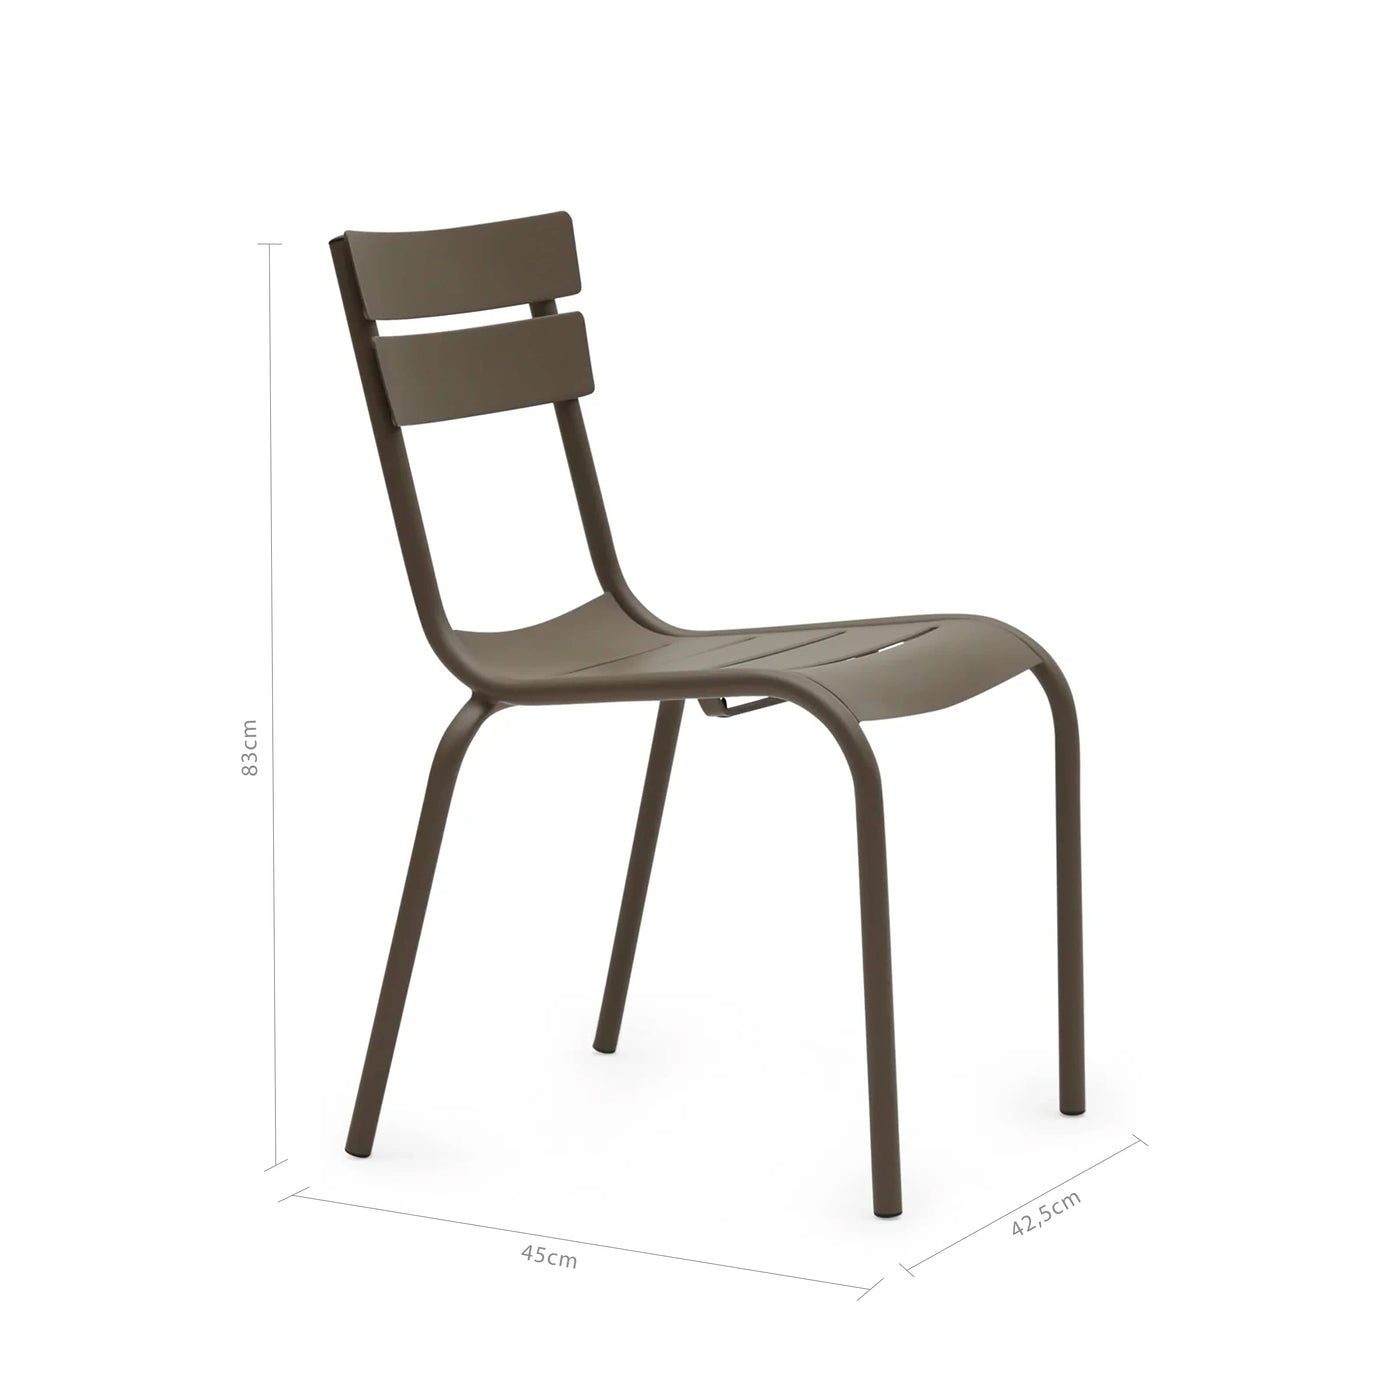 Rivioli Stackable Aluminium Garden Chair, Olive Drab Garden Chairs sazy.com